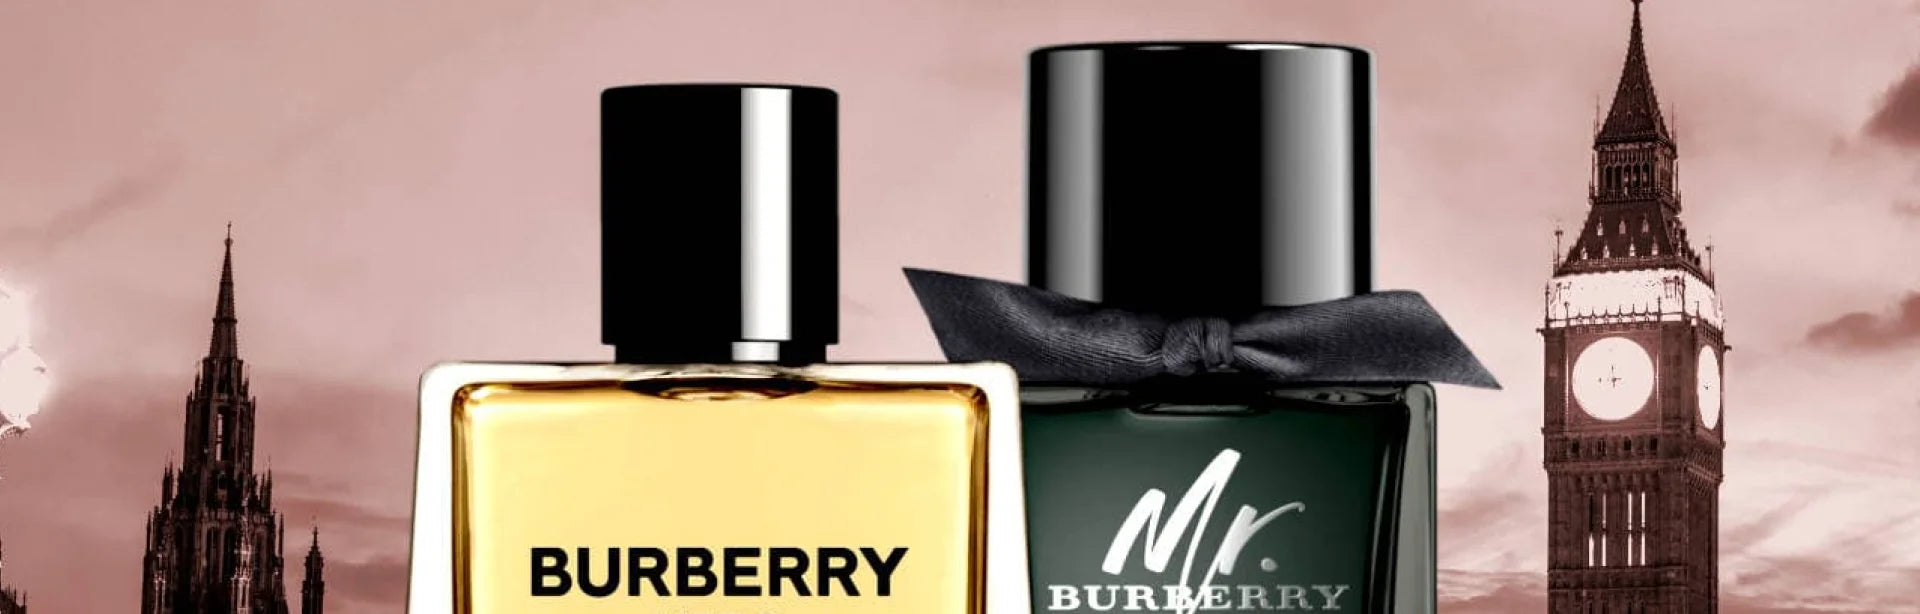 Burberry fragrances at BIJOUX in Jamaica